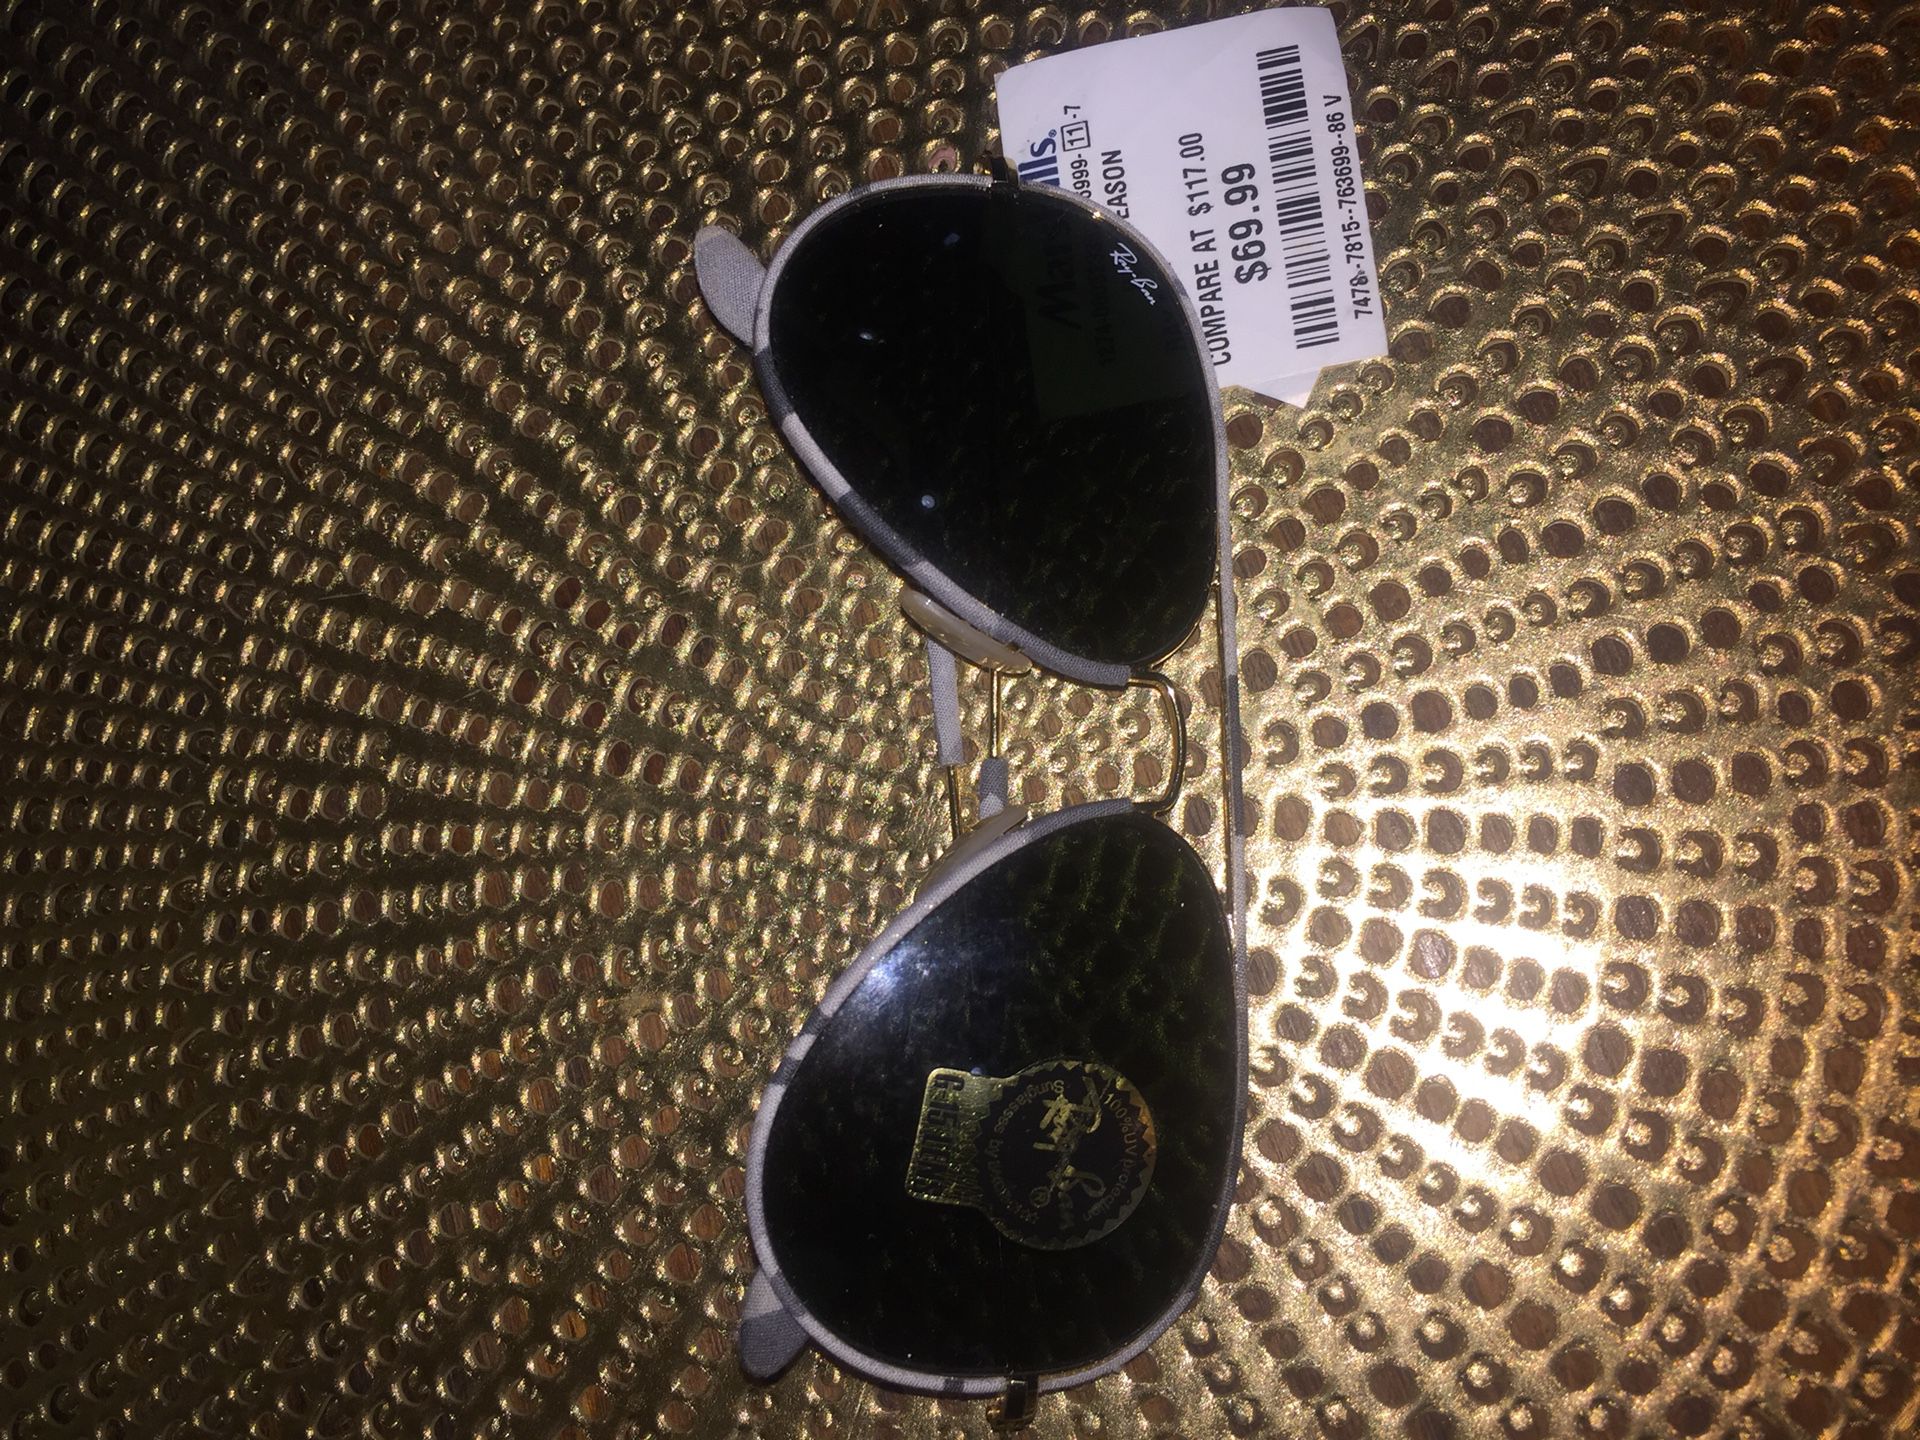 Sunglasses (color: black and gray)